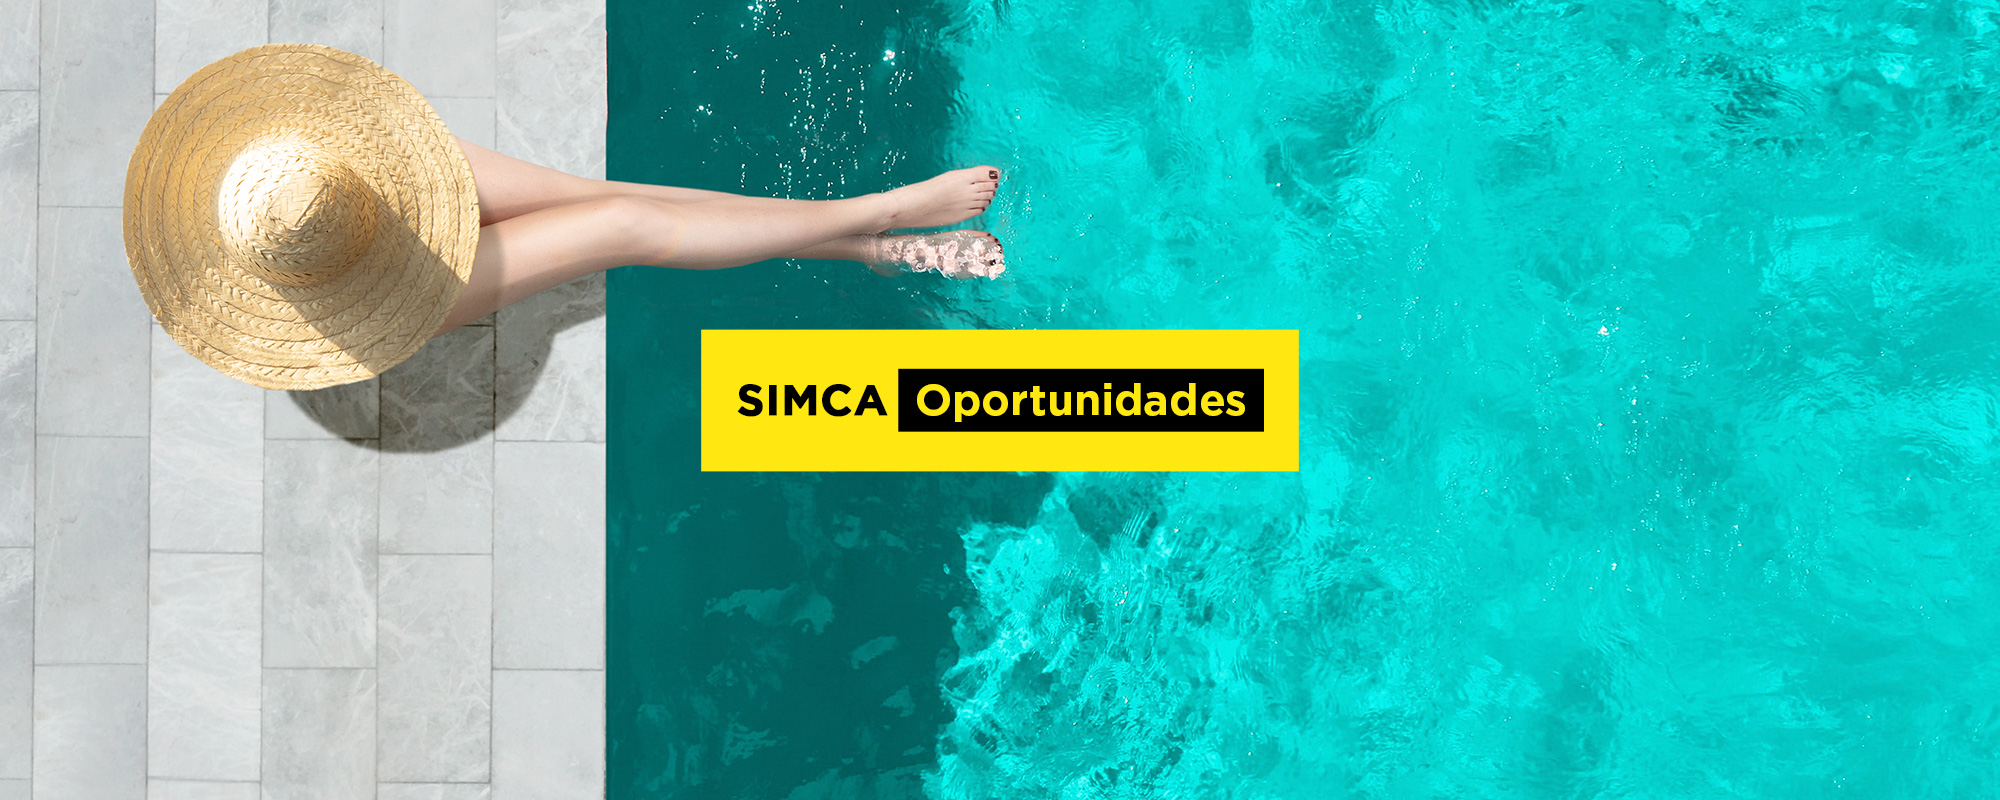 simca-oportunidades-slider-gral